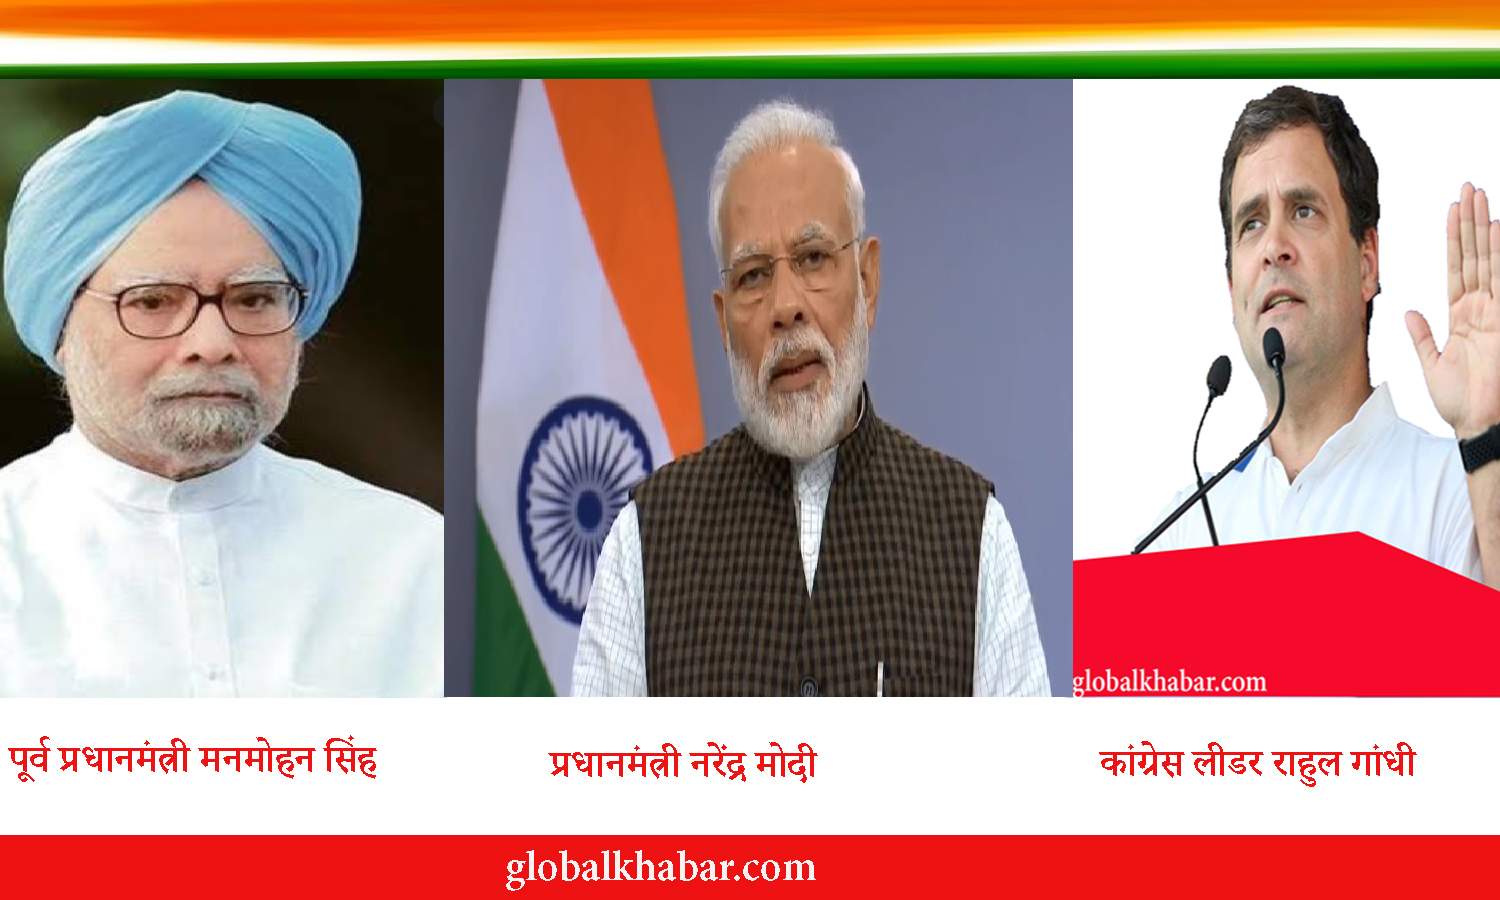 भारत-चीन प्रकरण : प्रधानमंत्री को पूर्व प्रधानमंत्री की बात माननी चाहिये - कांग्रेस अध्यक्ष राहुल गांधी